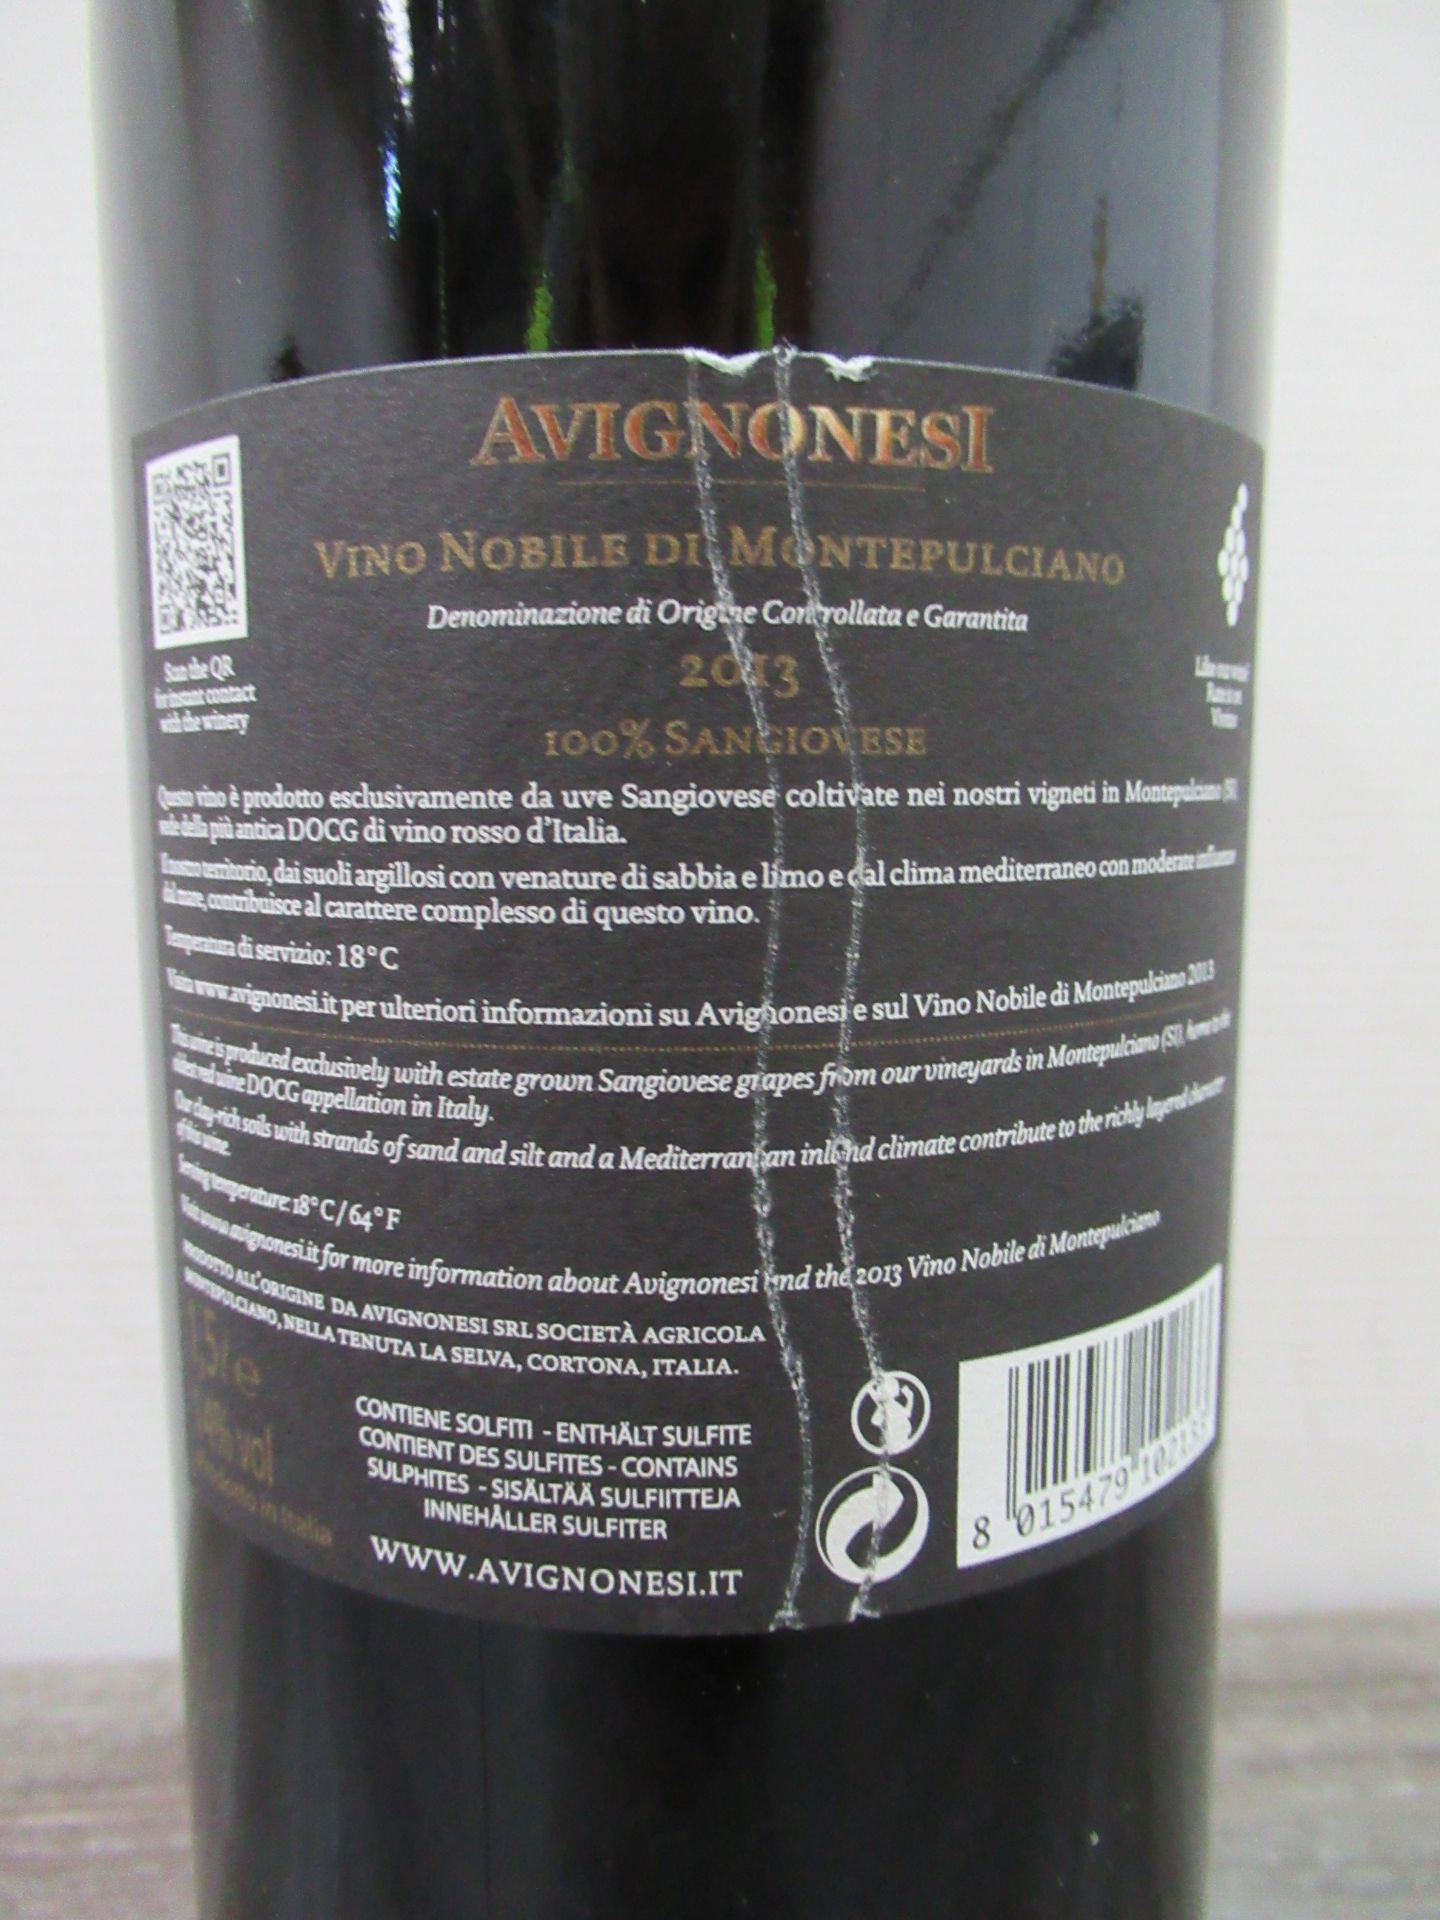 4 x Bottles "4 Boxes of Avignonesi Vine Nobile Di Montepulciano 2013 - Image 3 of 4